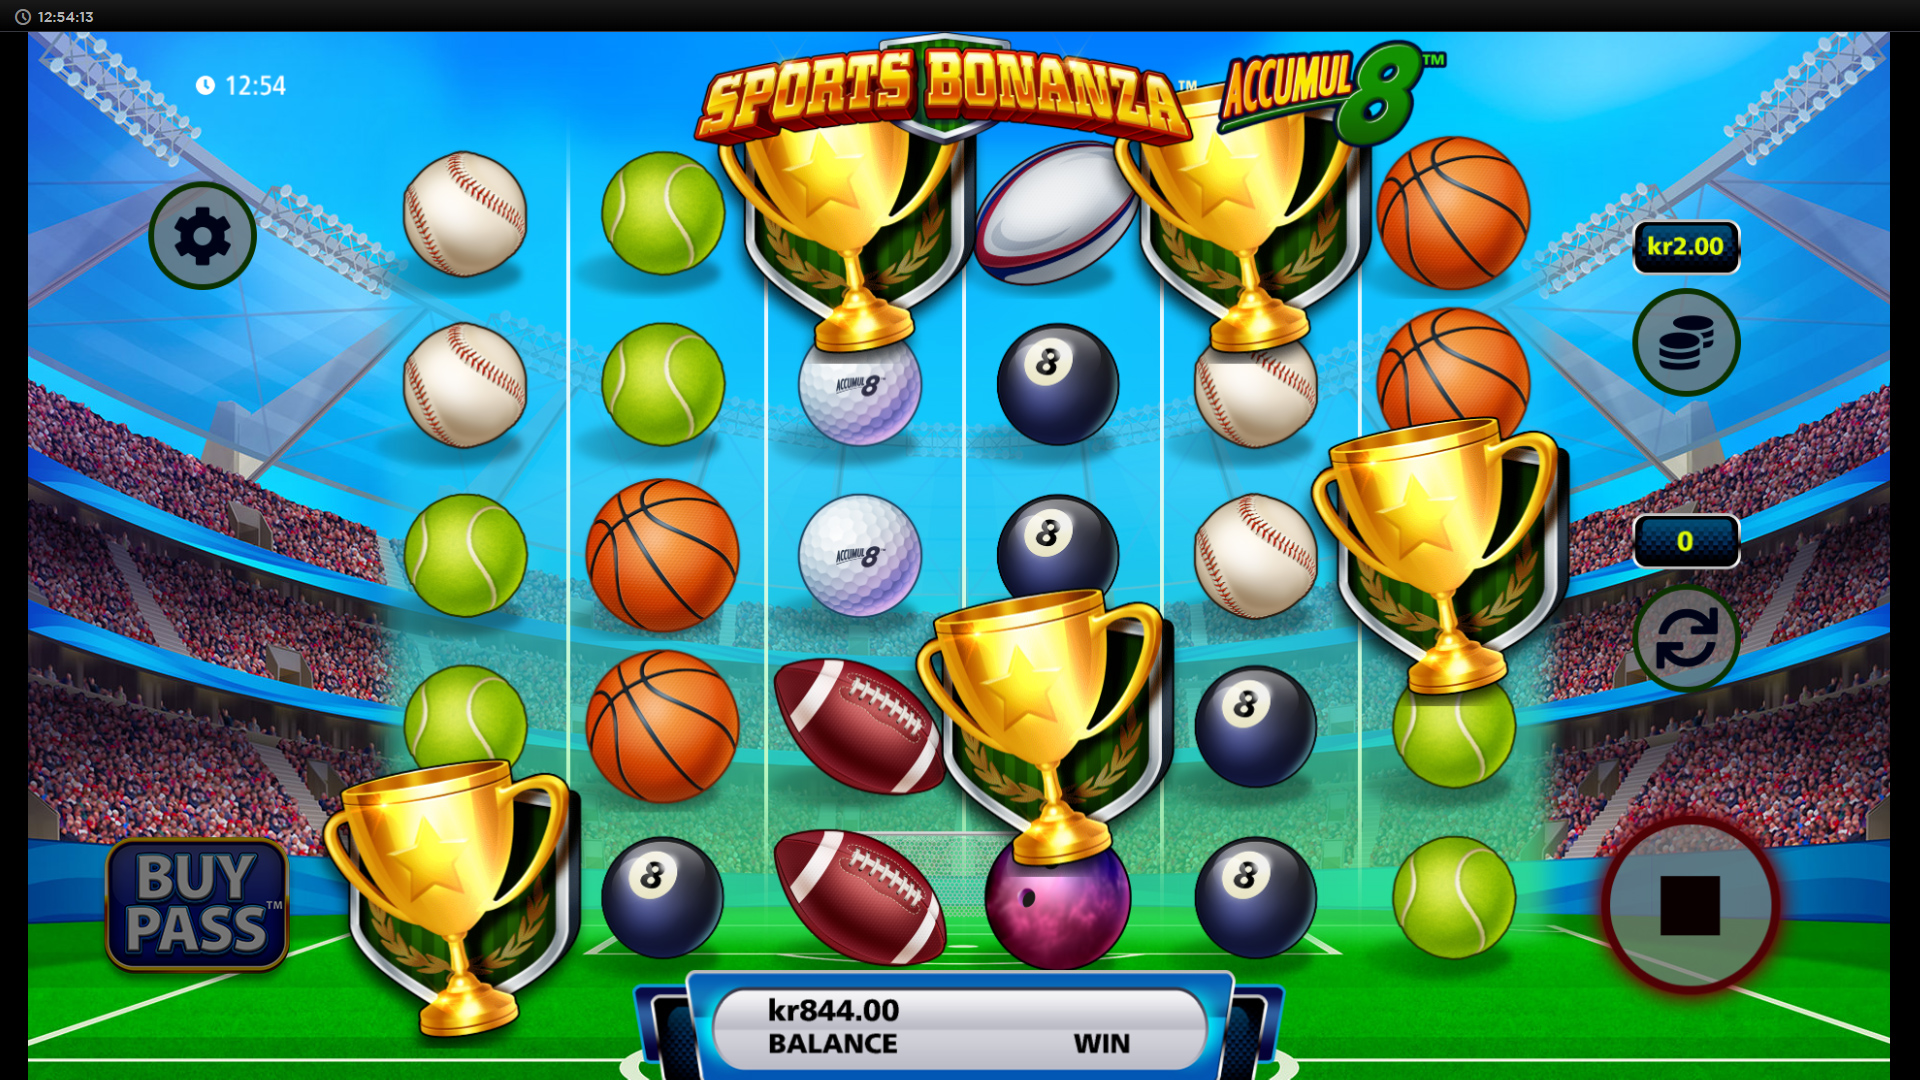 Sports-Bonanza-accumul8 slot big win